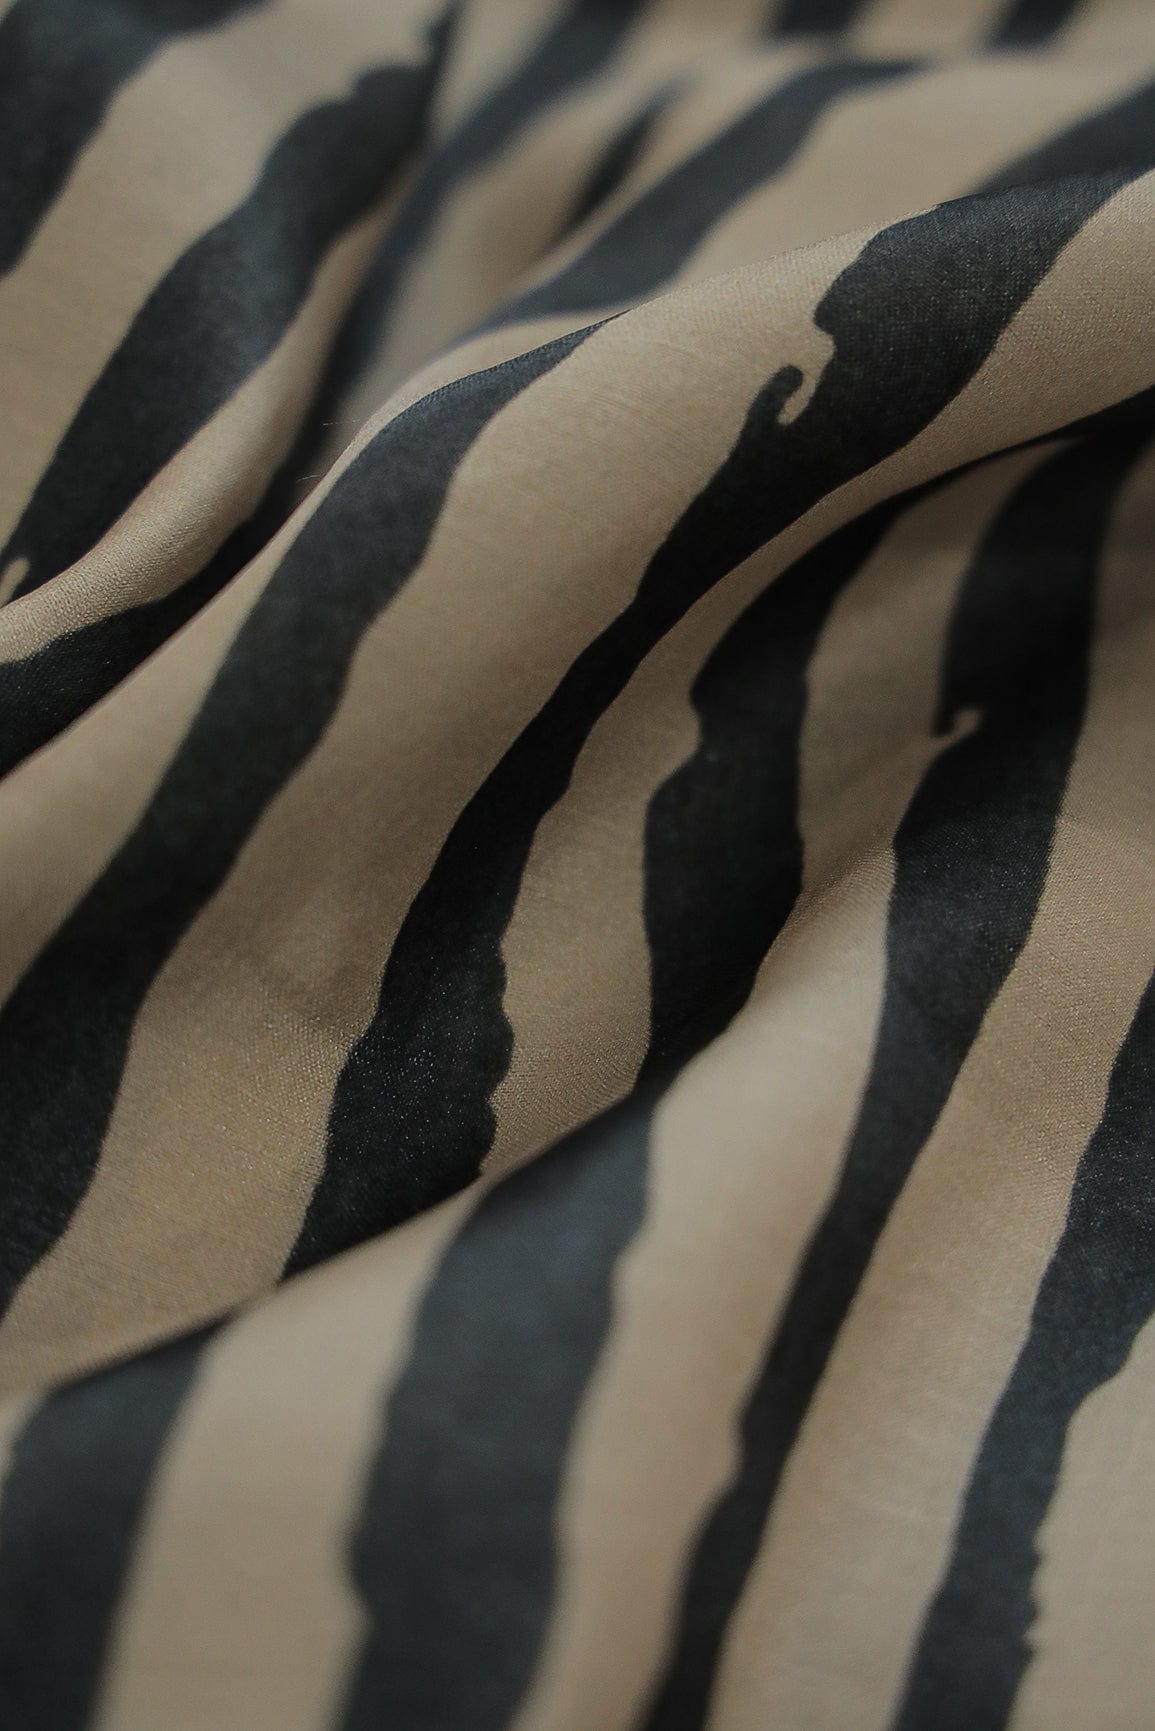 doeraa Prints Beige and Black Stripes Digital Print on Tussar Satin Fabric